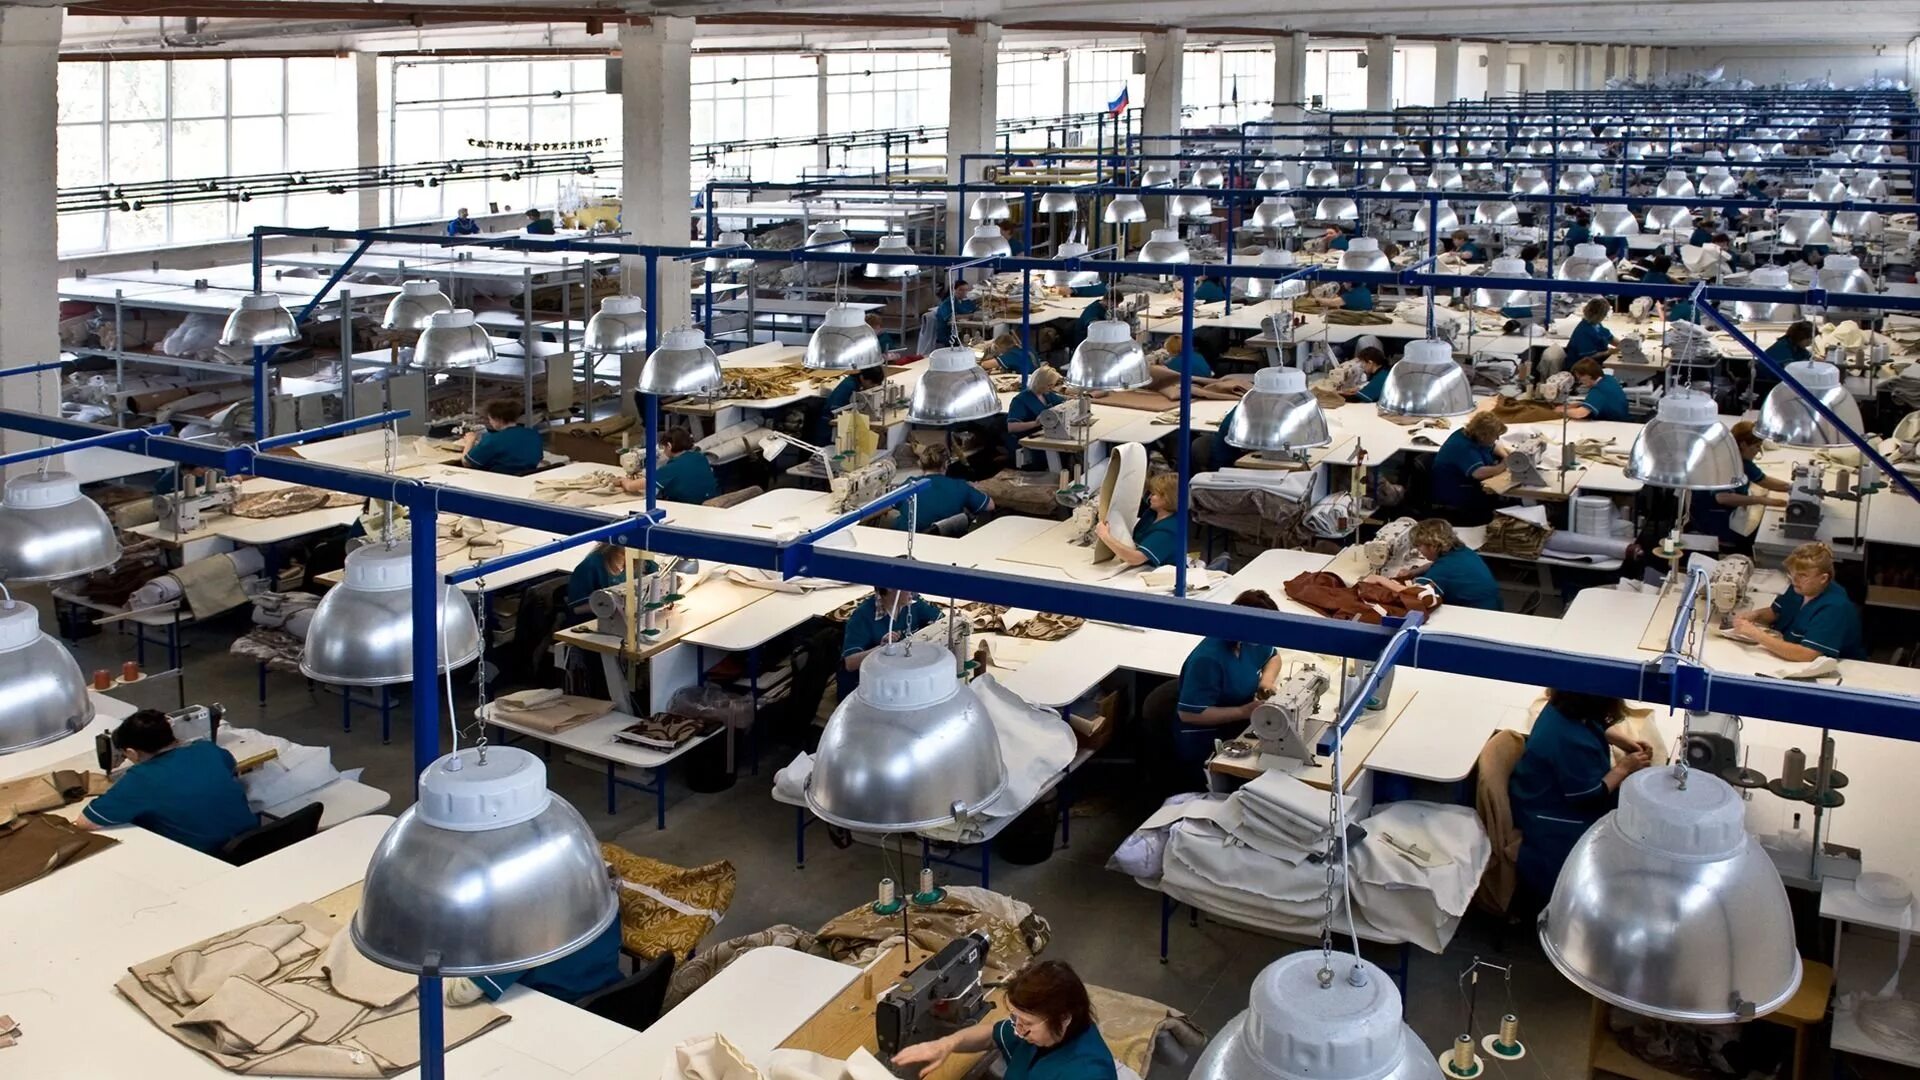 Фабрика - Ткацкая фабрика - швейная фабрика. Швейный цех. Текстильное производство. Цех текстильной фабрики. Фабричная предприятия